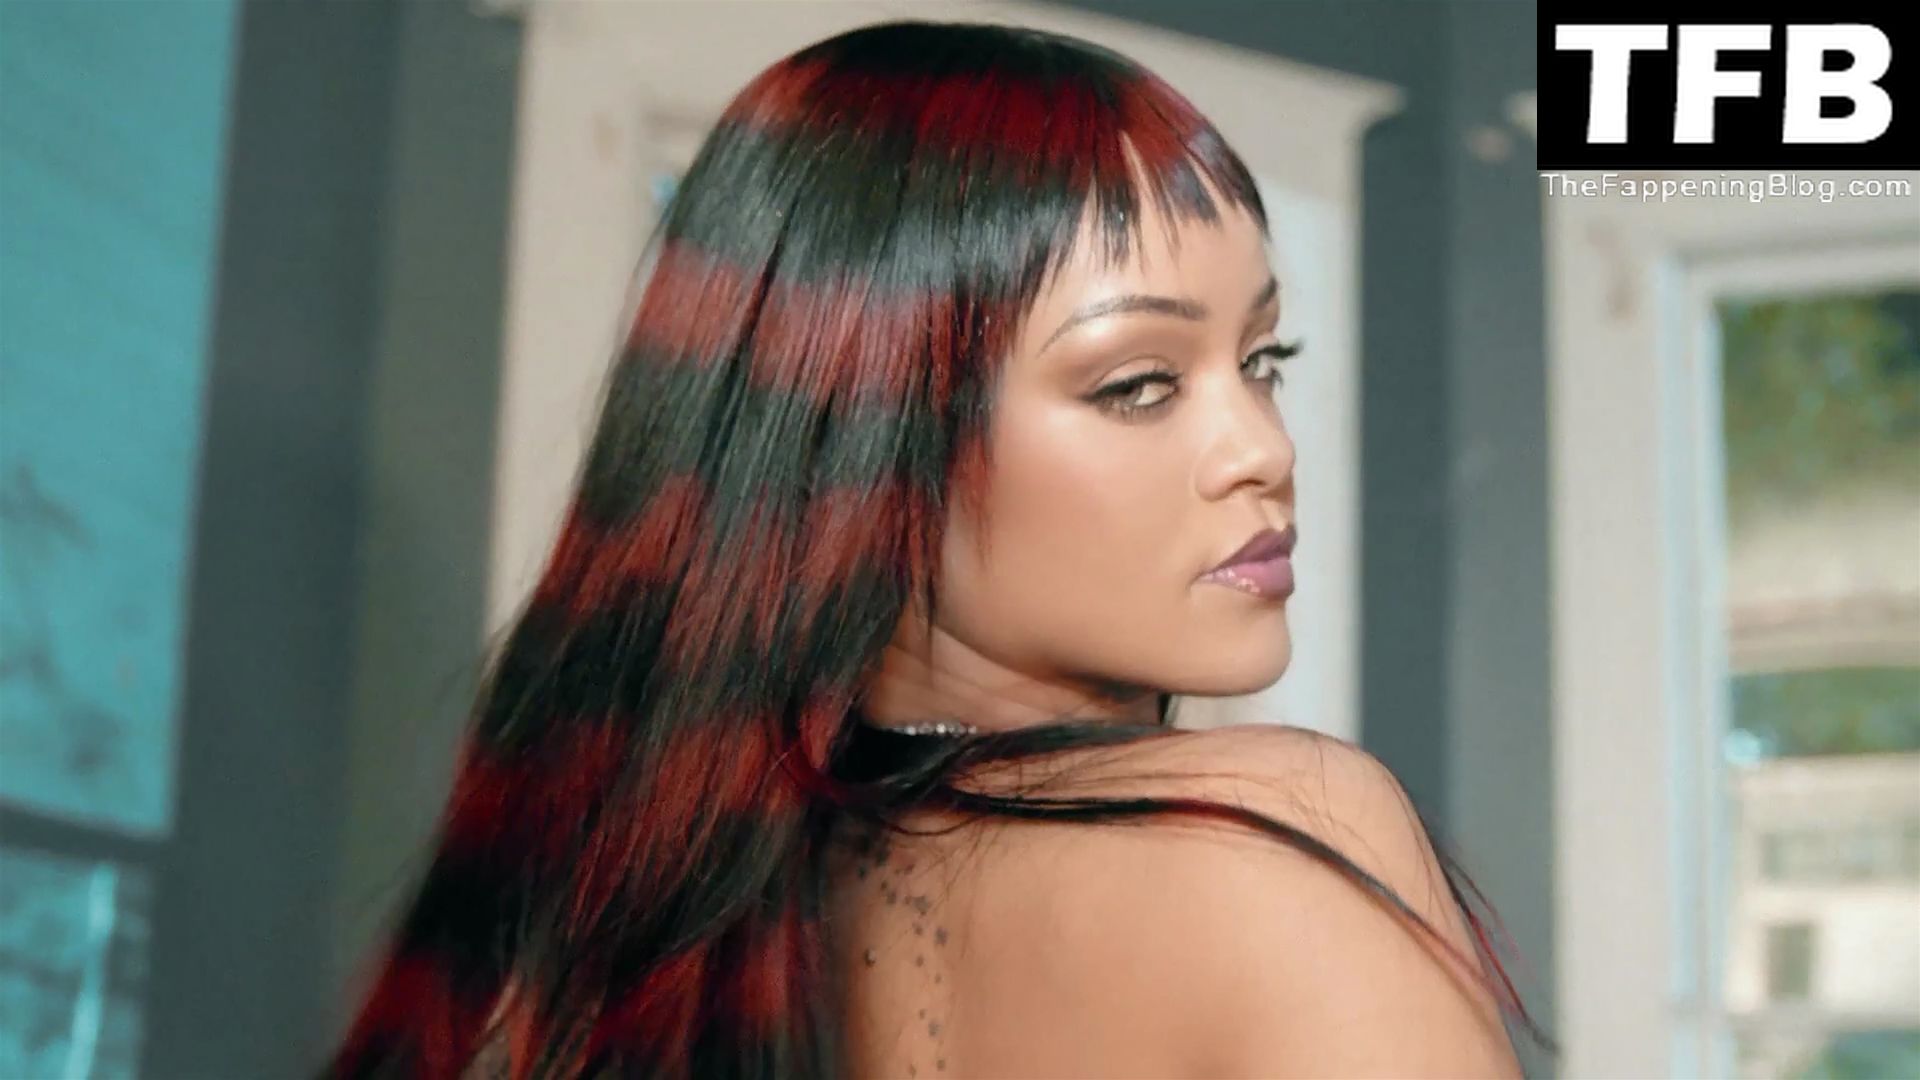 Rihanna-Sexy-Love-On-the-Edge-The-Fappening-Blog-16.jpg